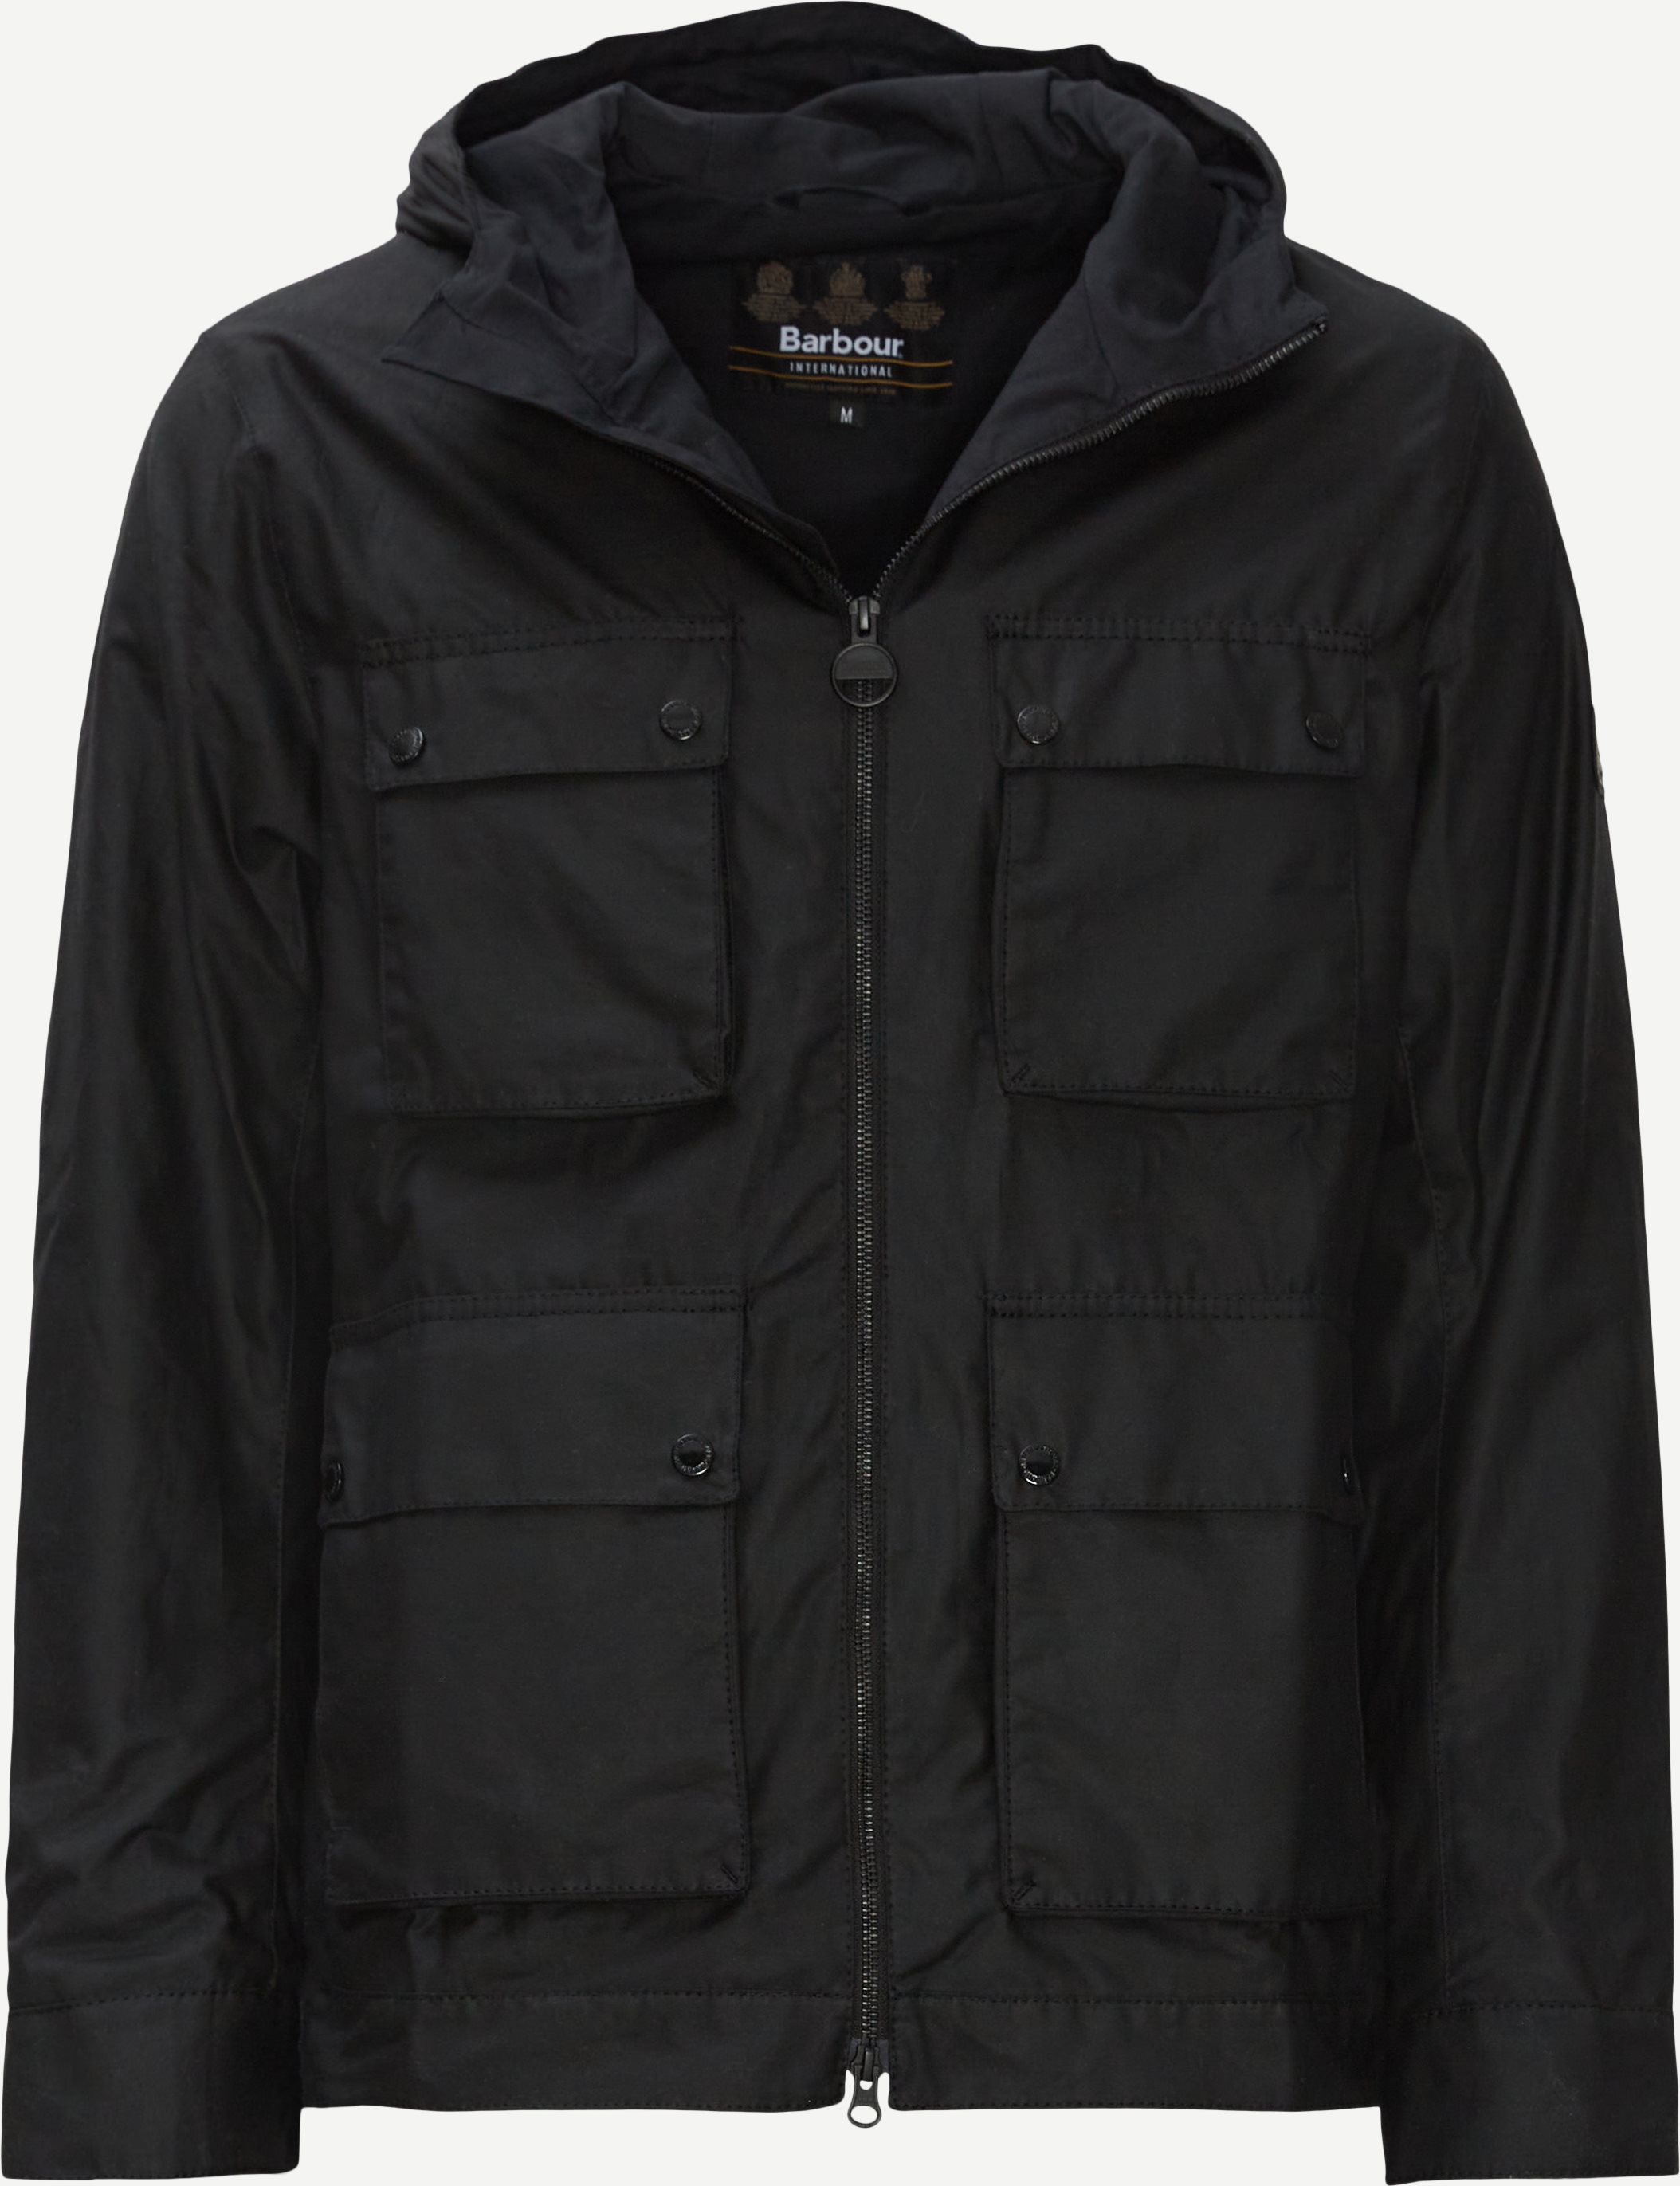 Jackets - Regular fit - Black